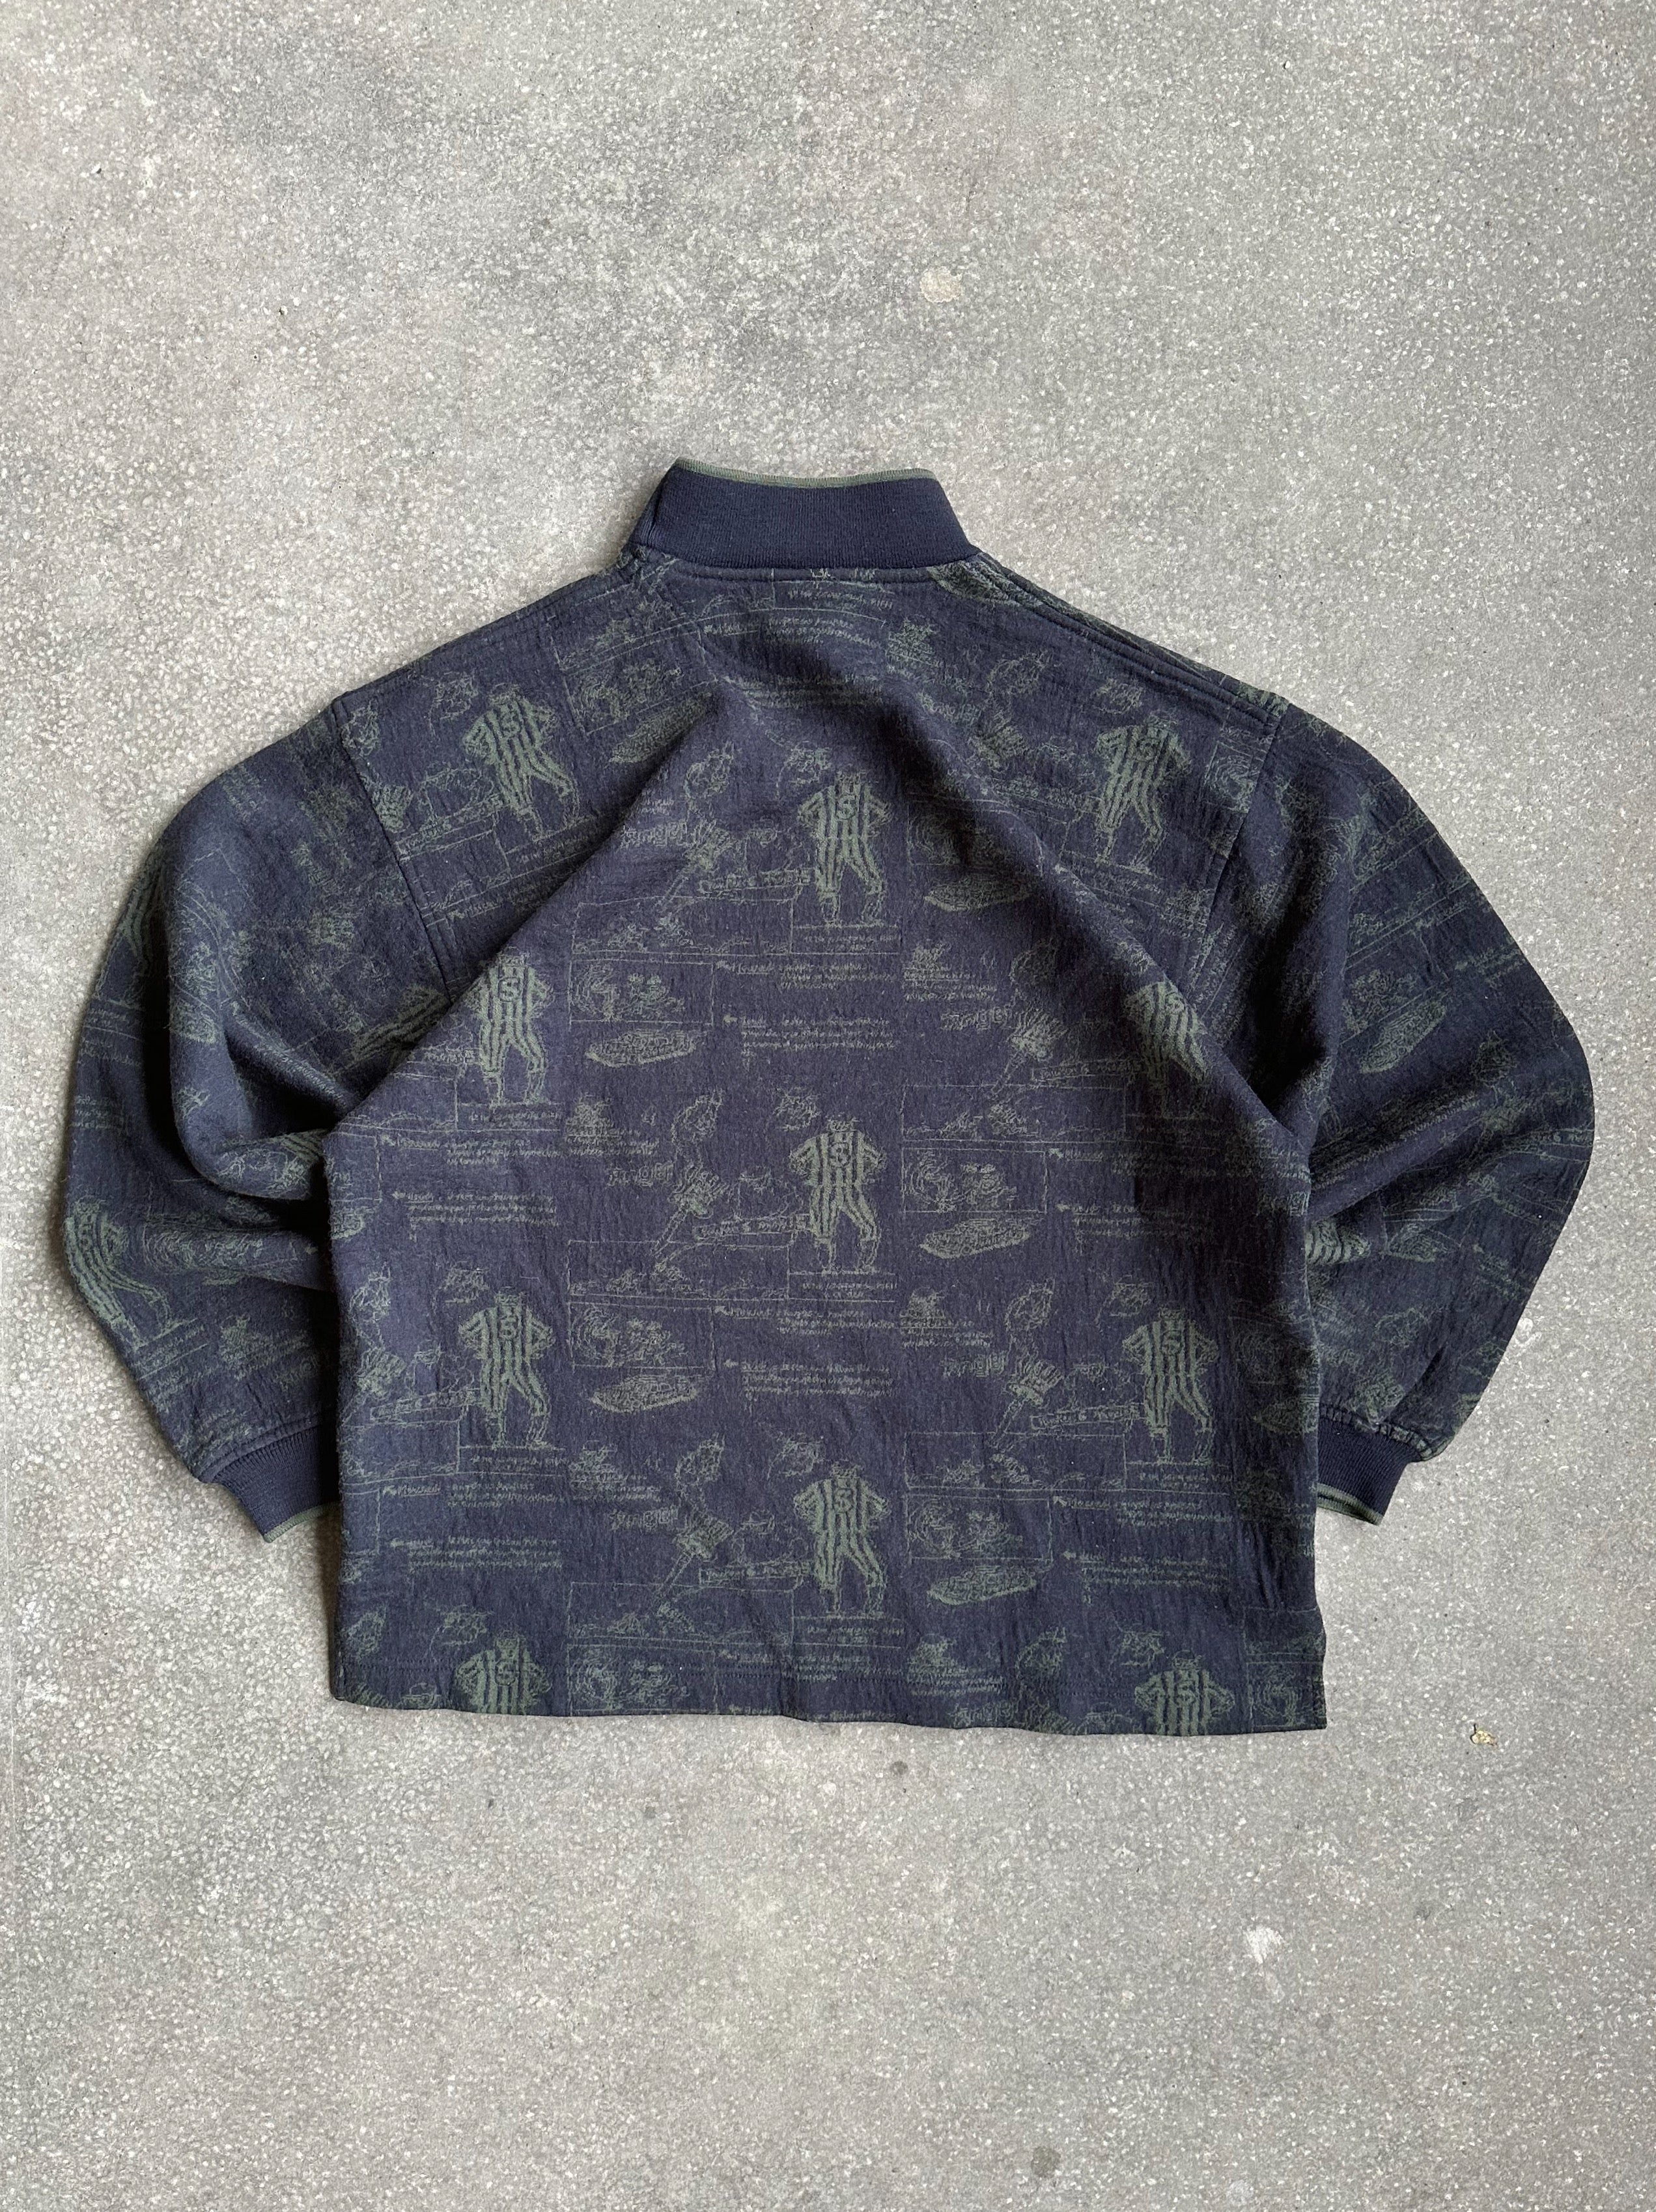 Vintage Ocean Pacific Mock-Neck Sweater - Large